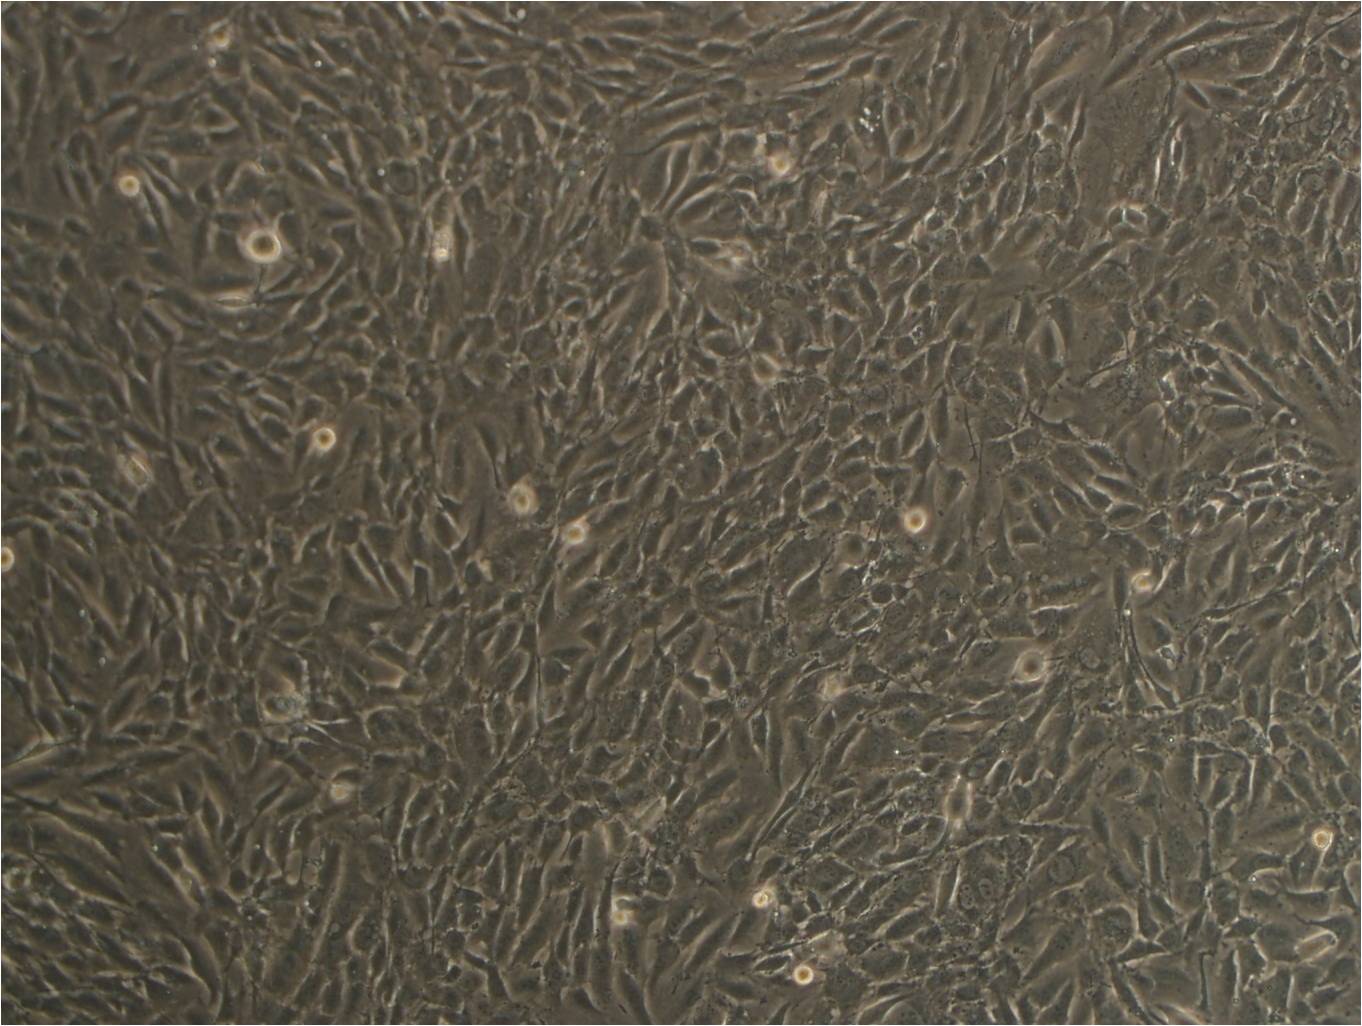 MC3T3-E1 Subclone 24 cell line小鼠胚胎成骨细胞系,MC3T3-E1 Subclone 24 cell line